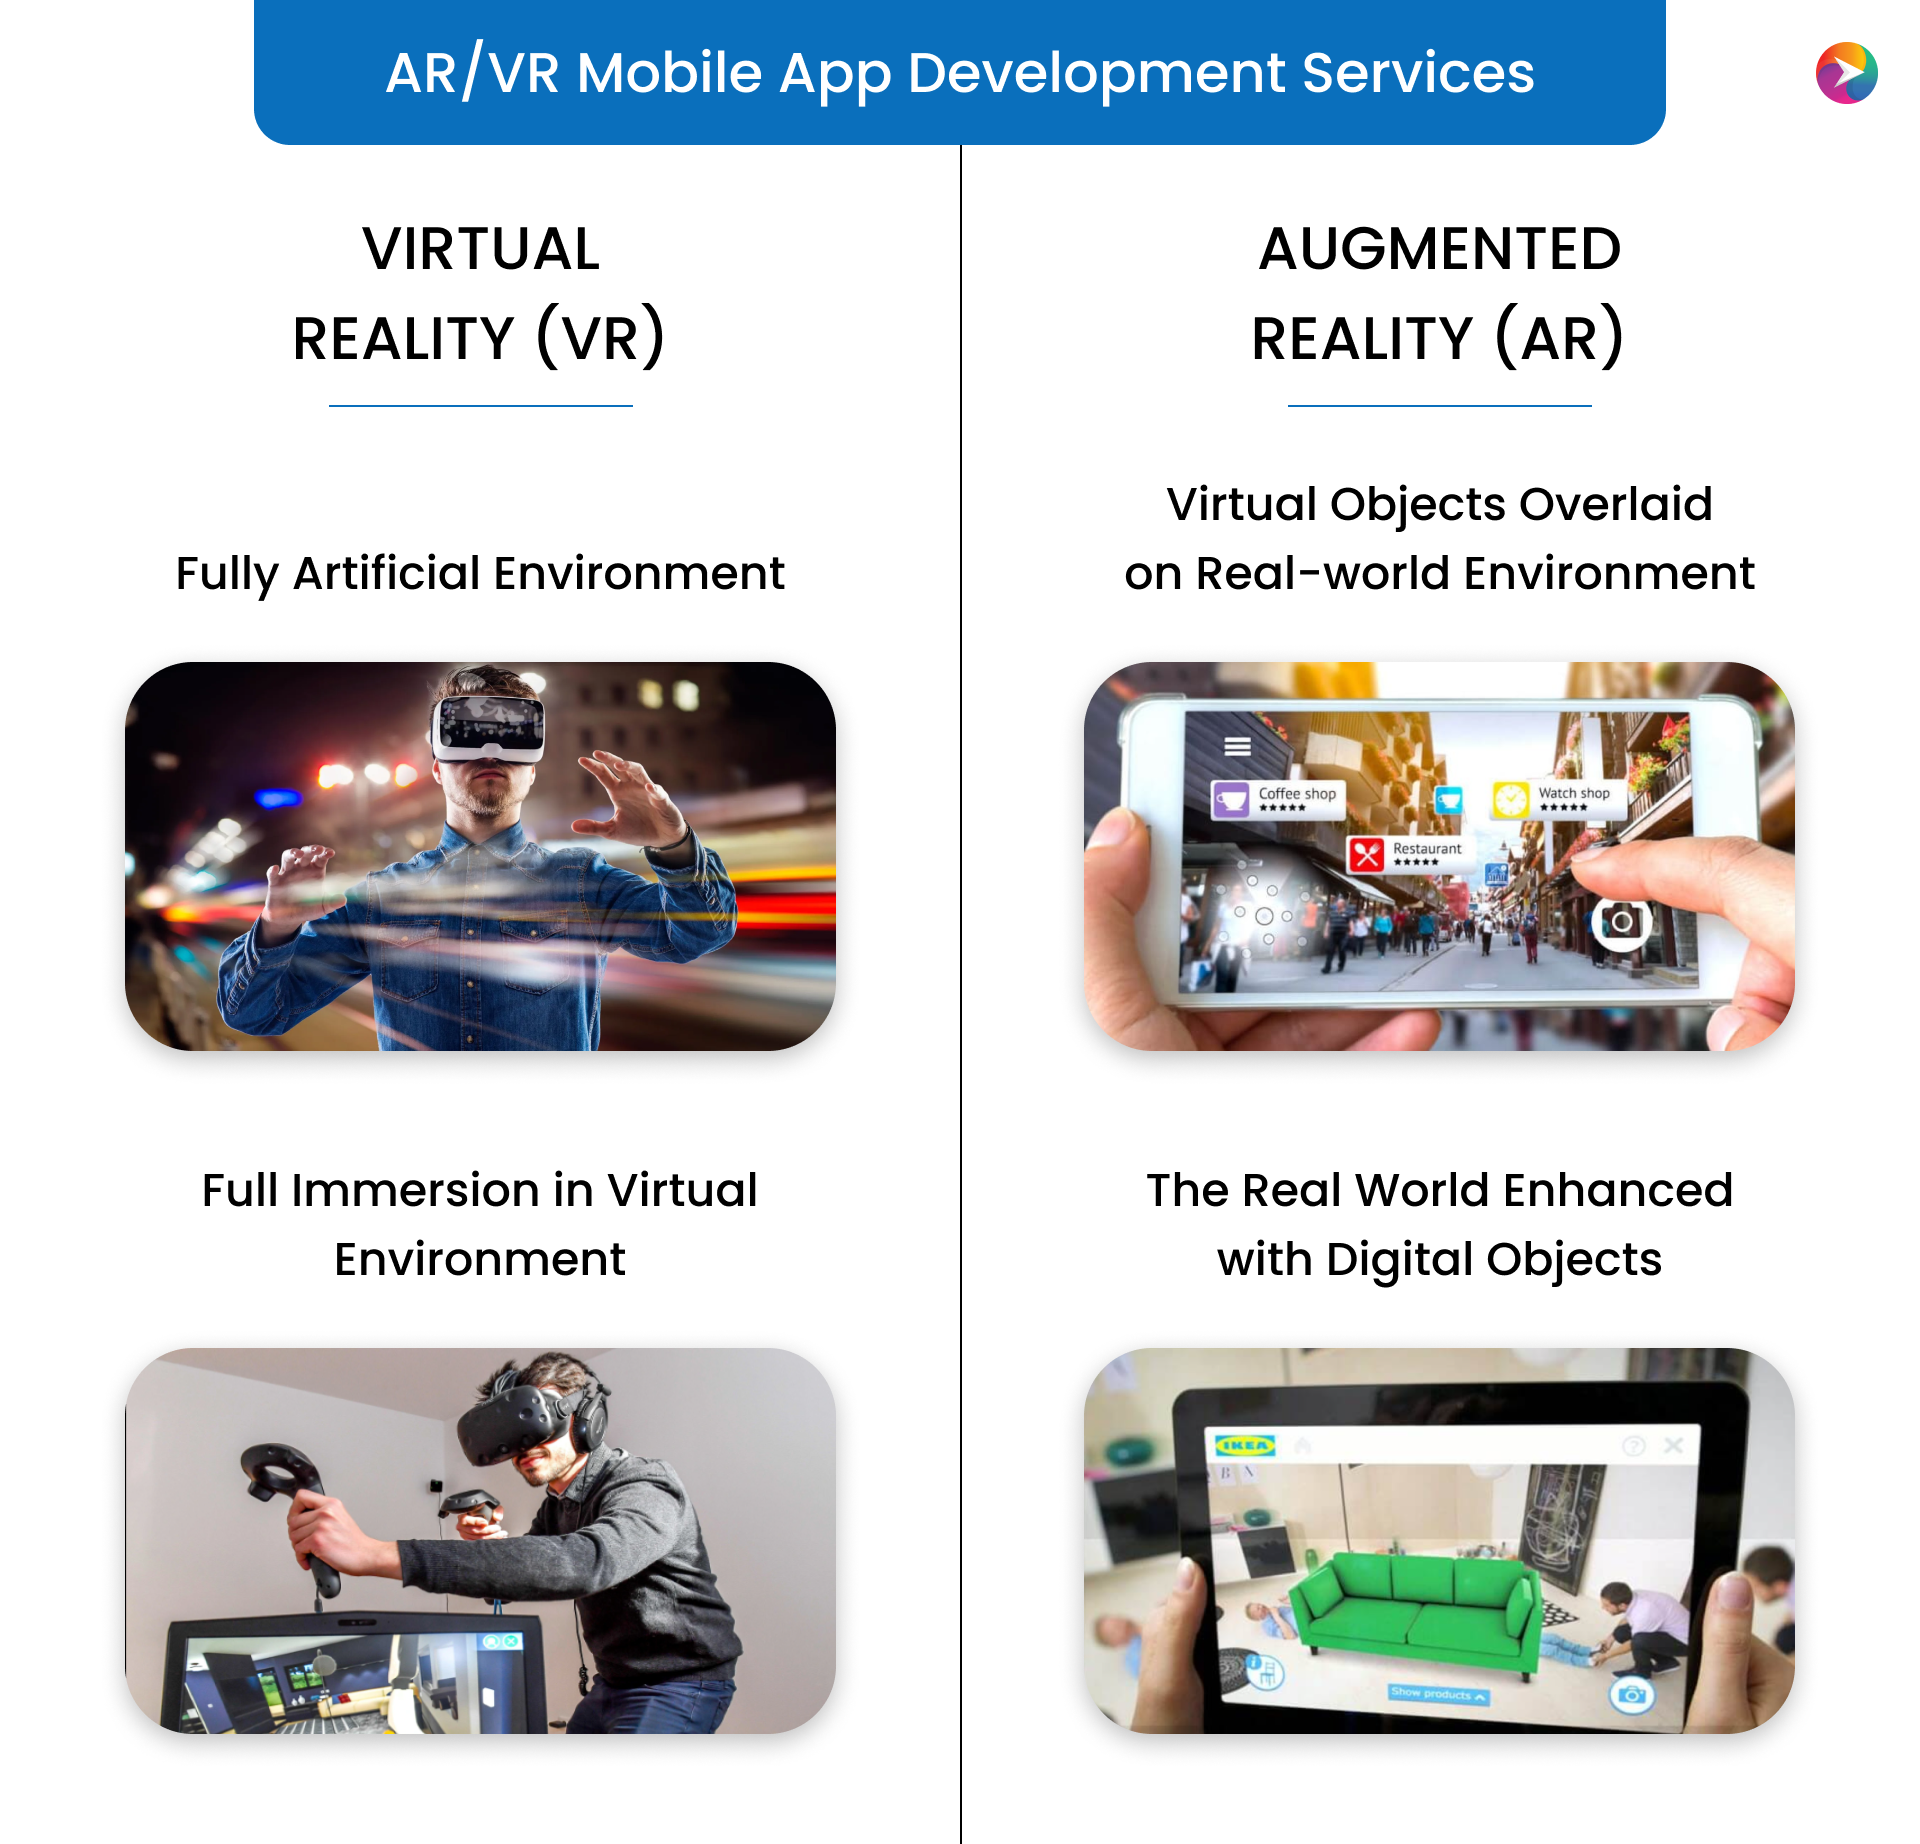 AR/VR Mobile App Development Services